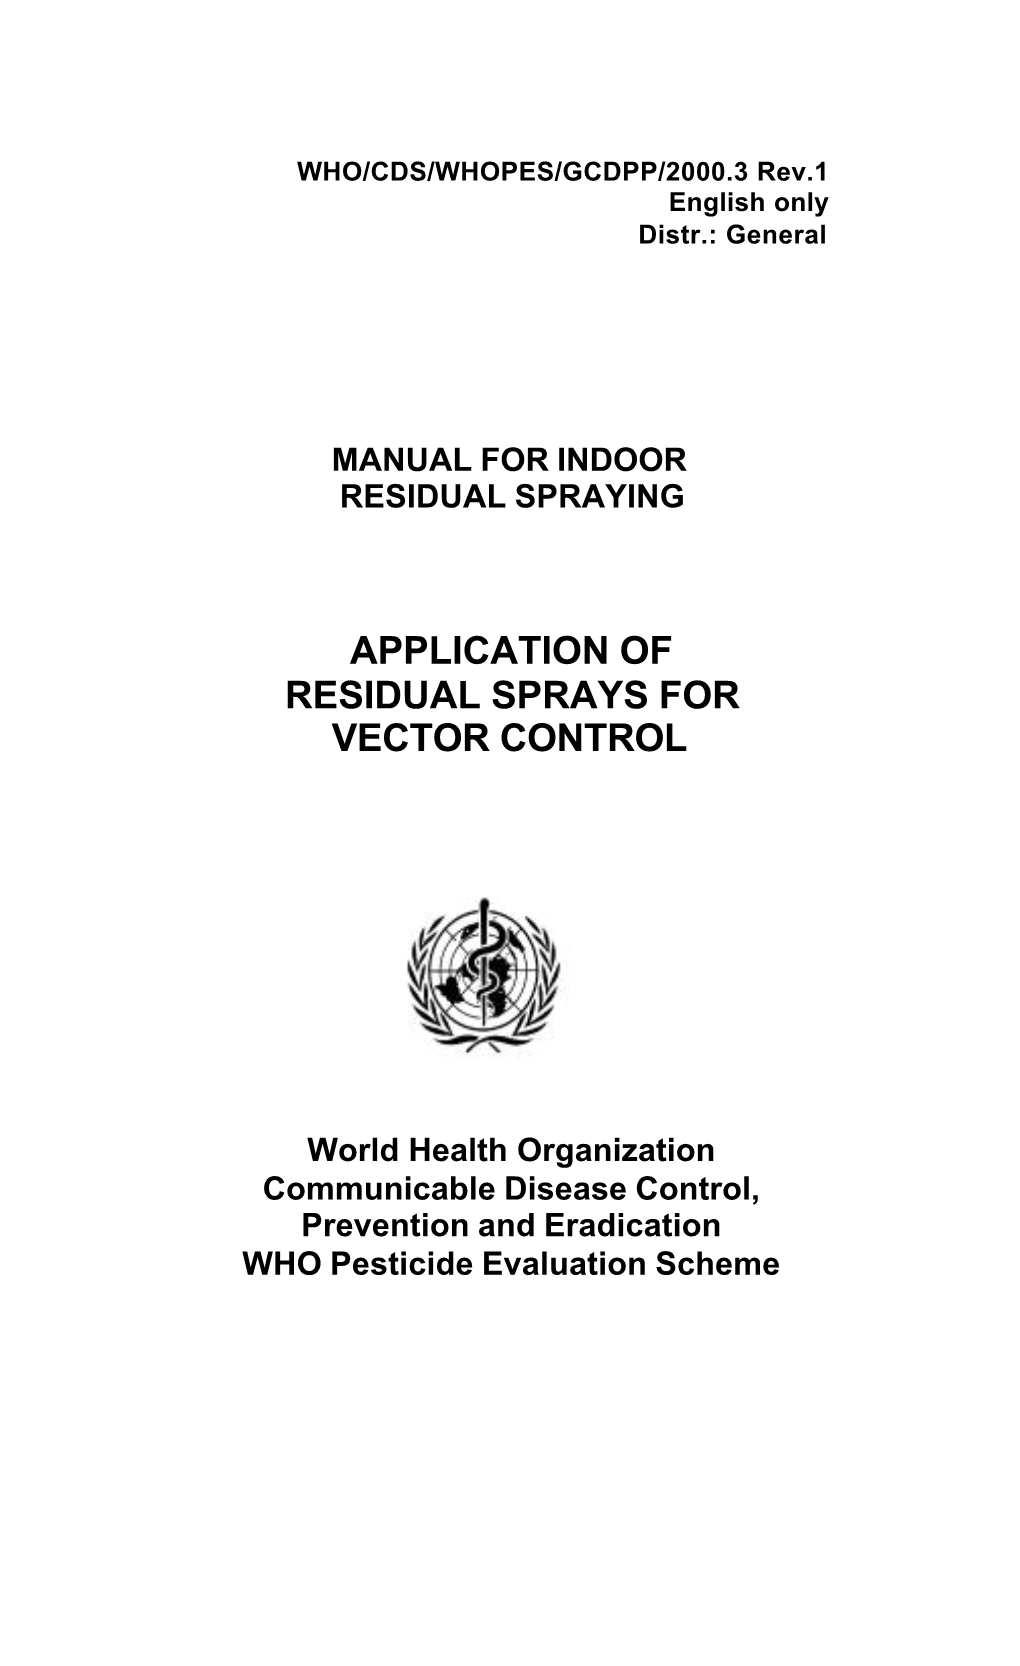 WHO. Manual Indoor Residual Spraying. 2002